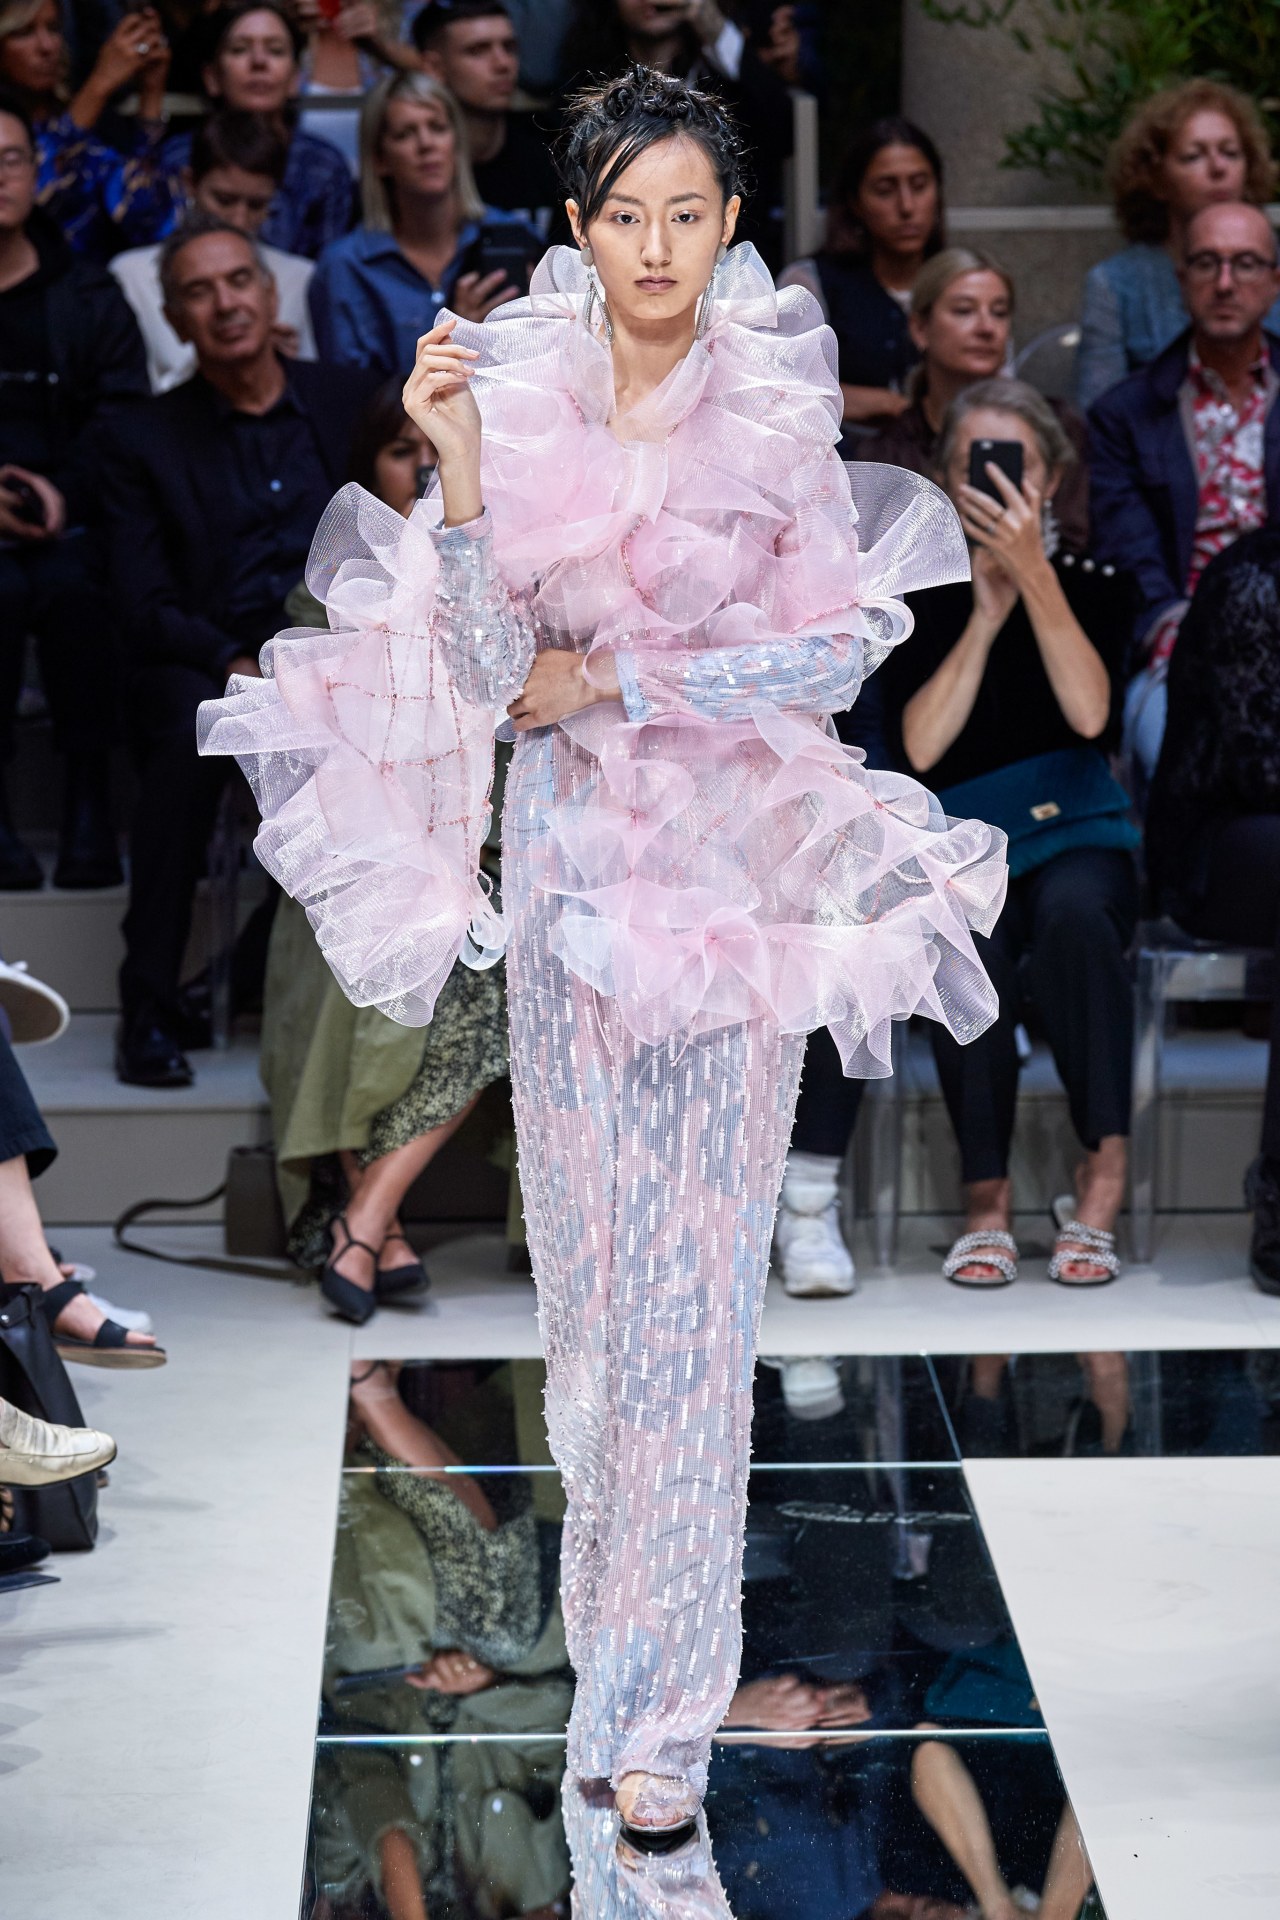 Suzy Menkes at Milan Fashion Week ready-to-wear spring/summer 2020